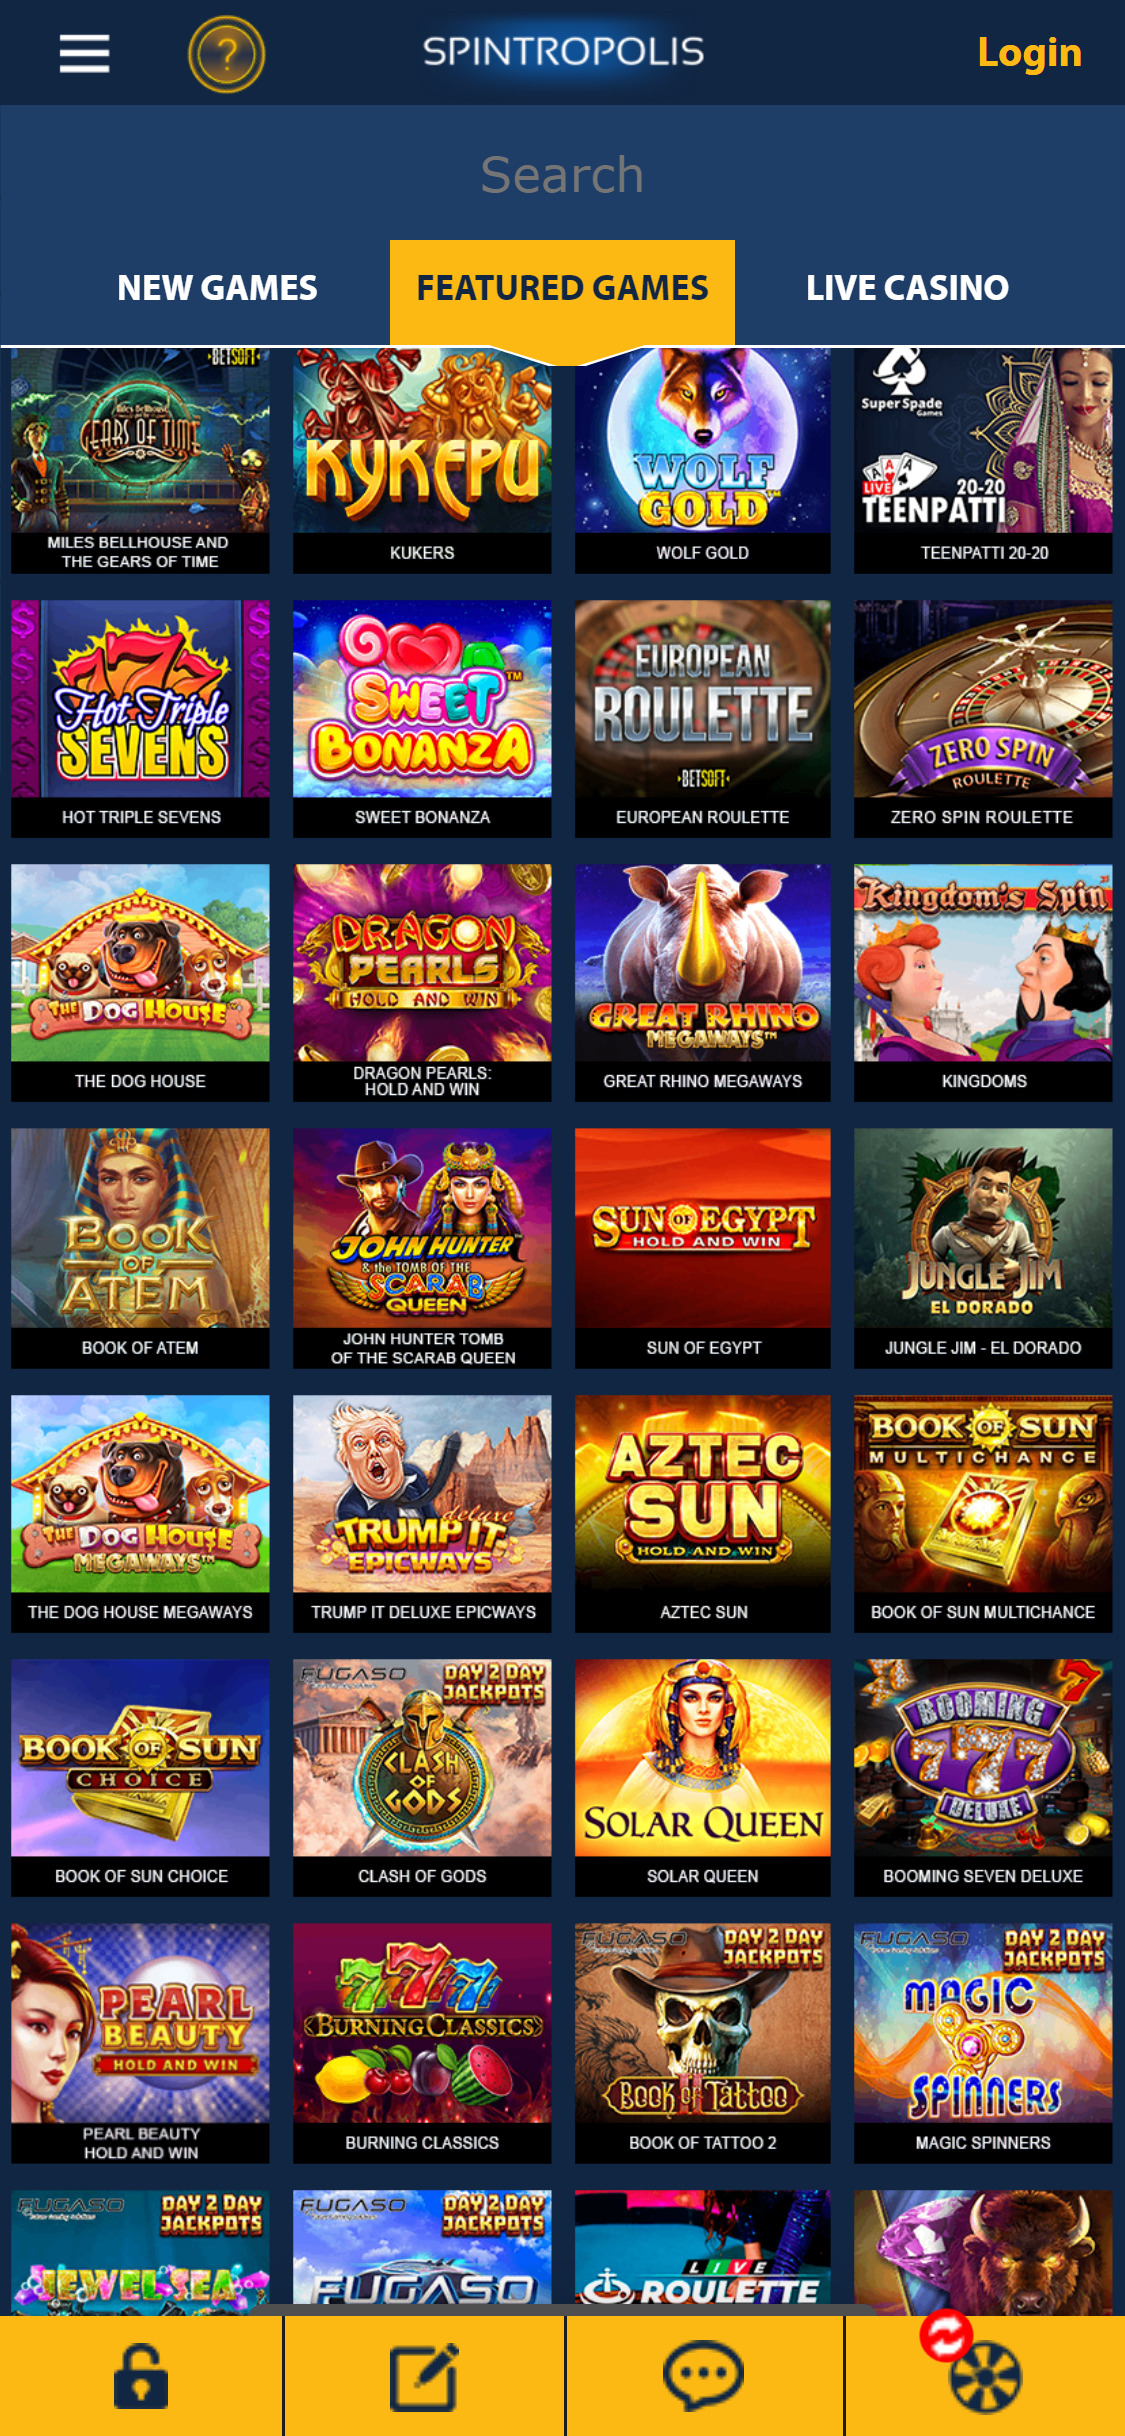 Spintropolis Casino Mobile Games Review